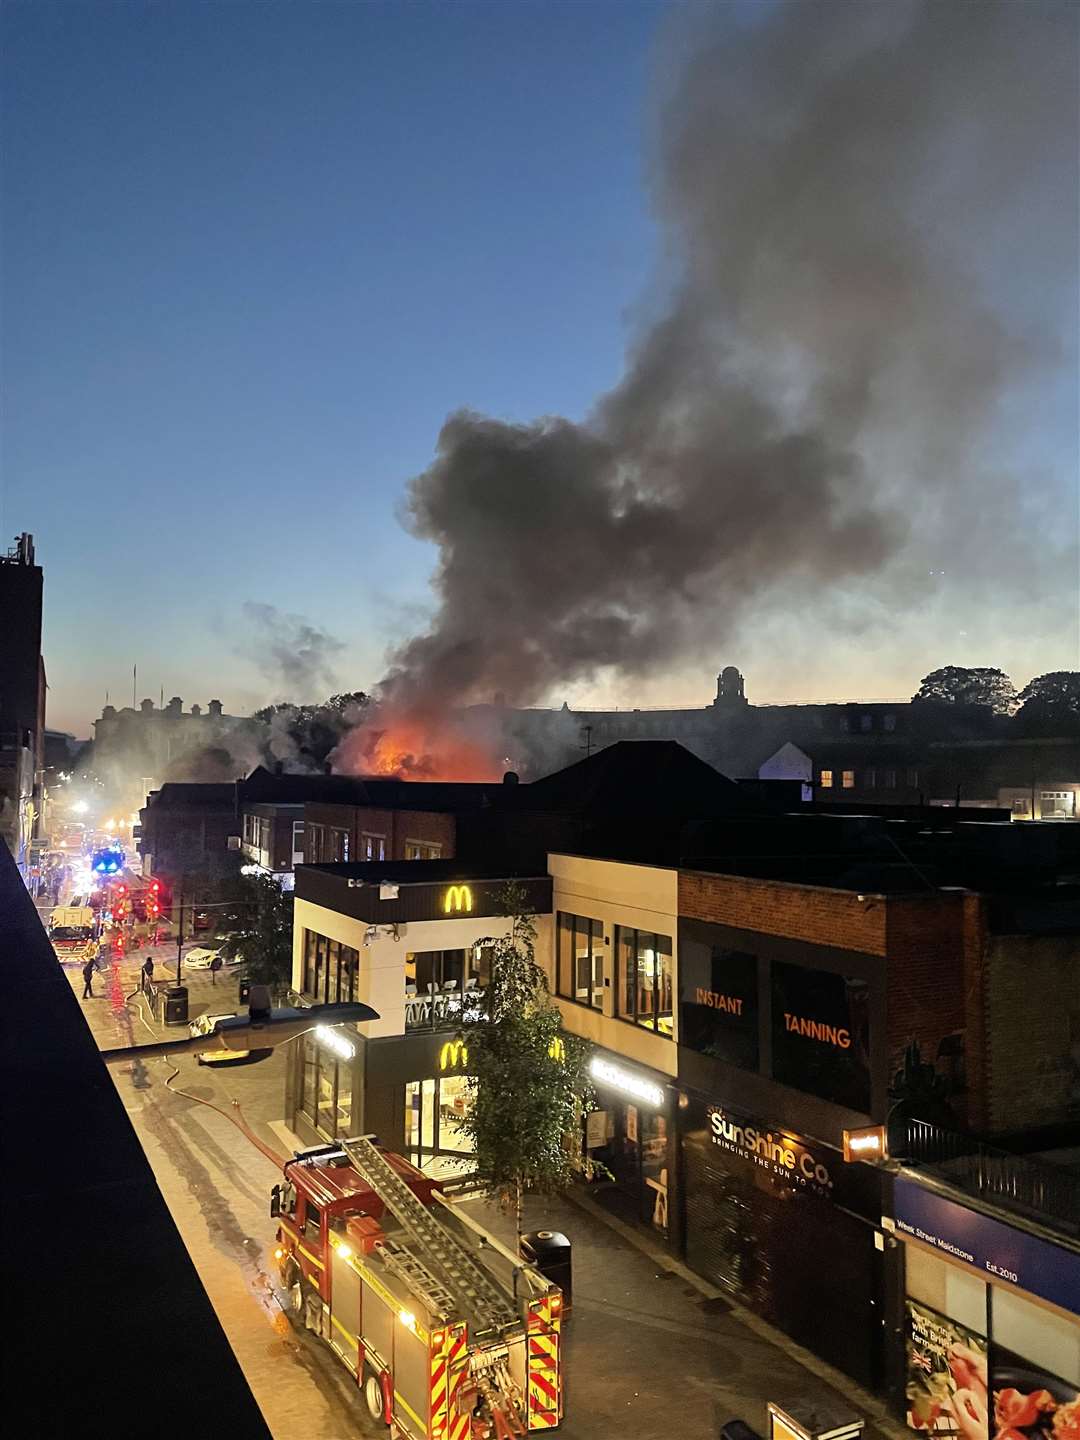 Fire takes hold in Mu Mu bar in Maidstone Picture: Steve Gibbs